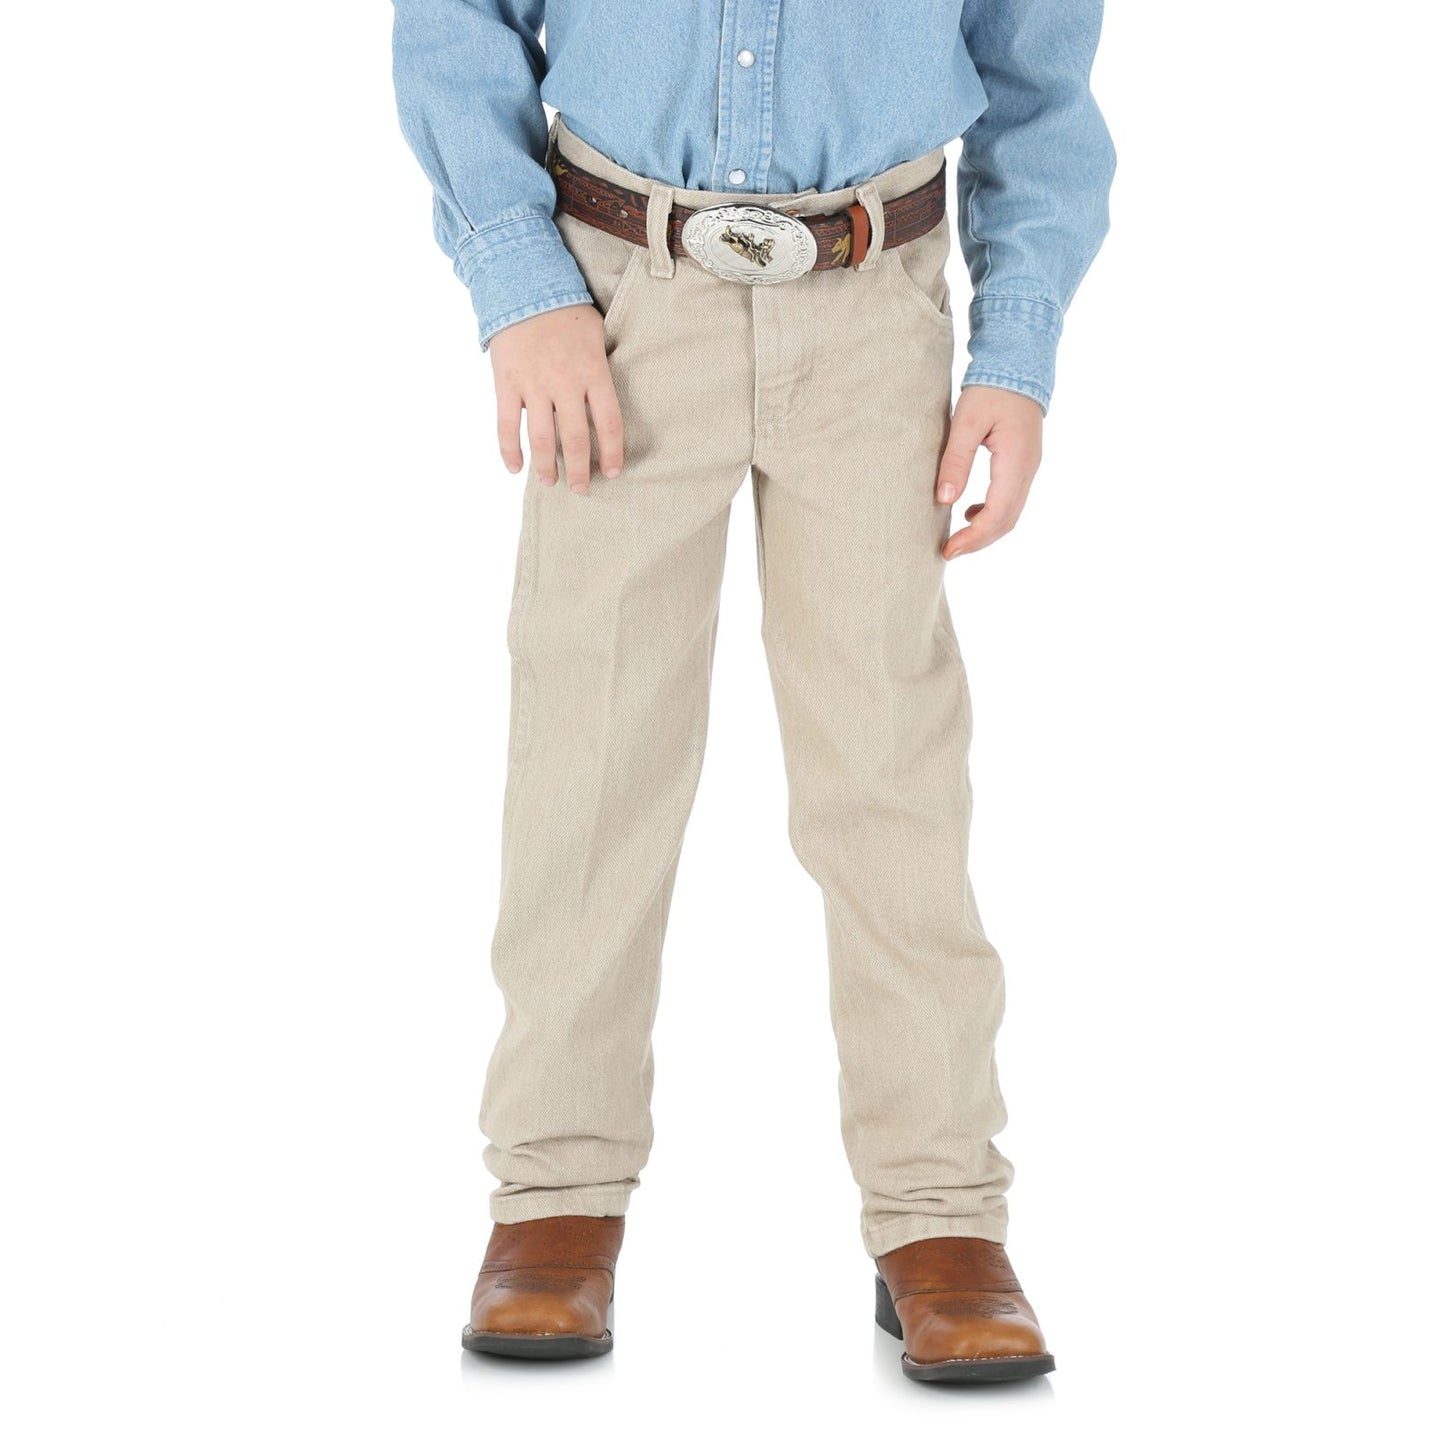 Boy’s Wrangler Cowboy Cut Tan Original Fit Jean (8-20)